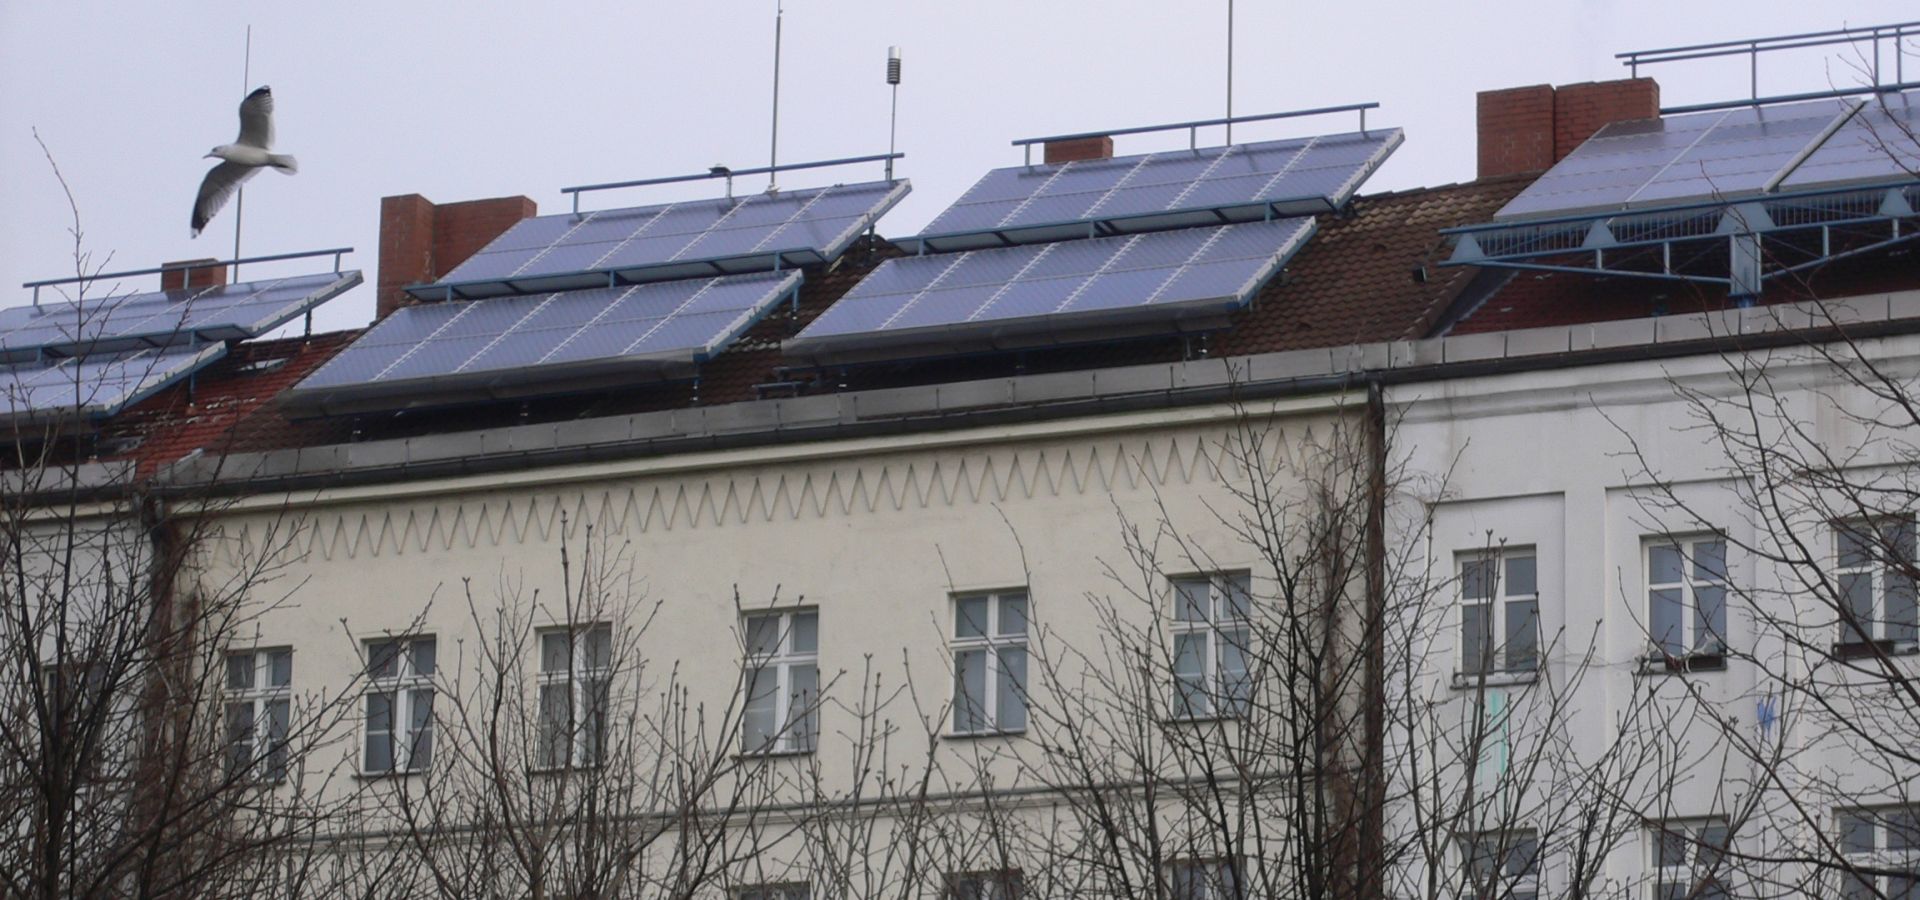 PV rooftop panels in Berlin